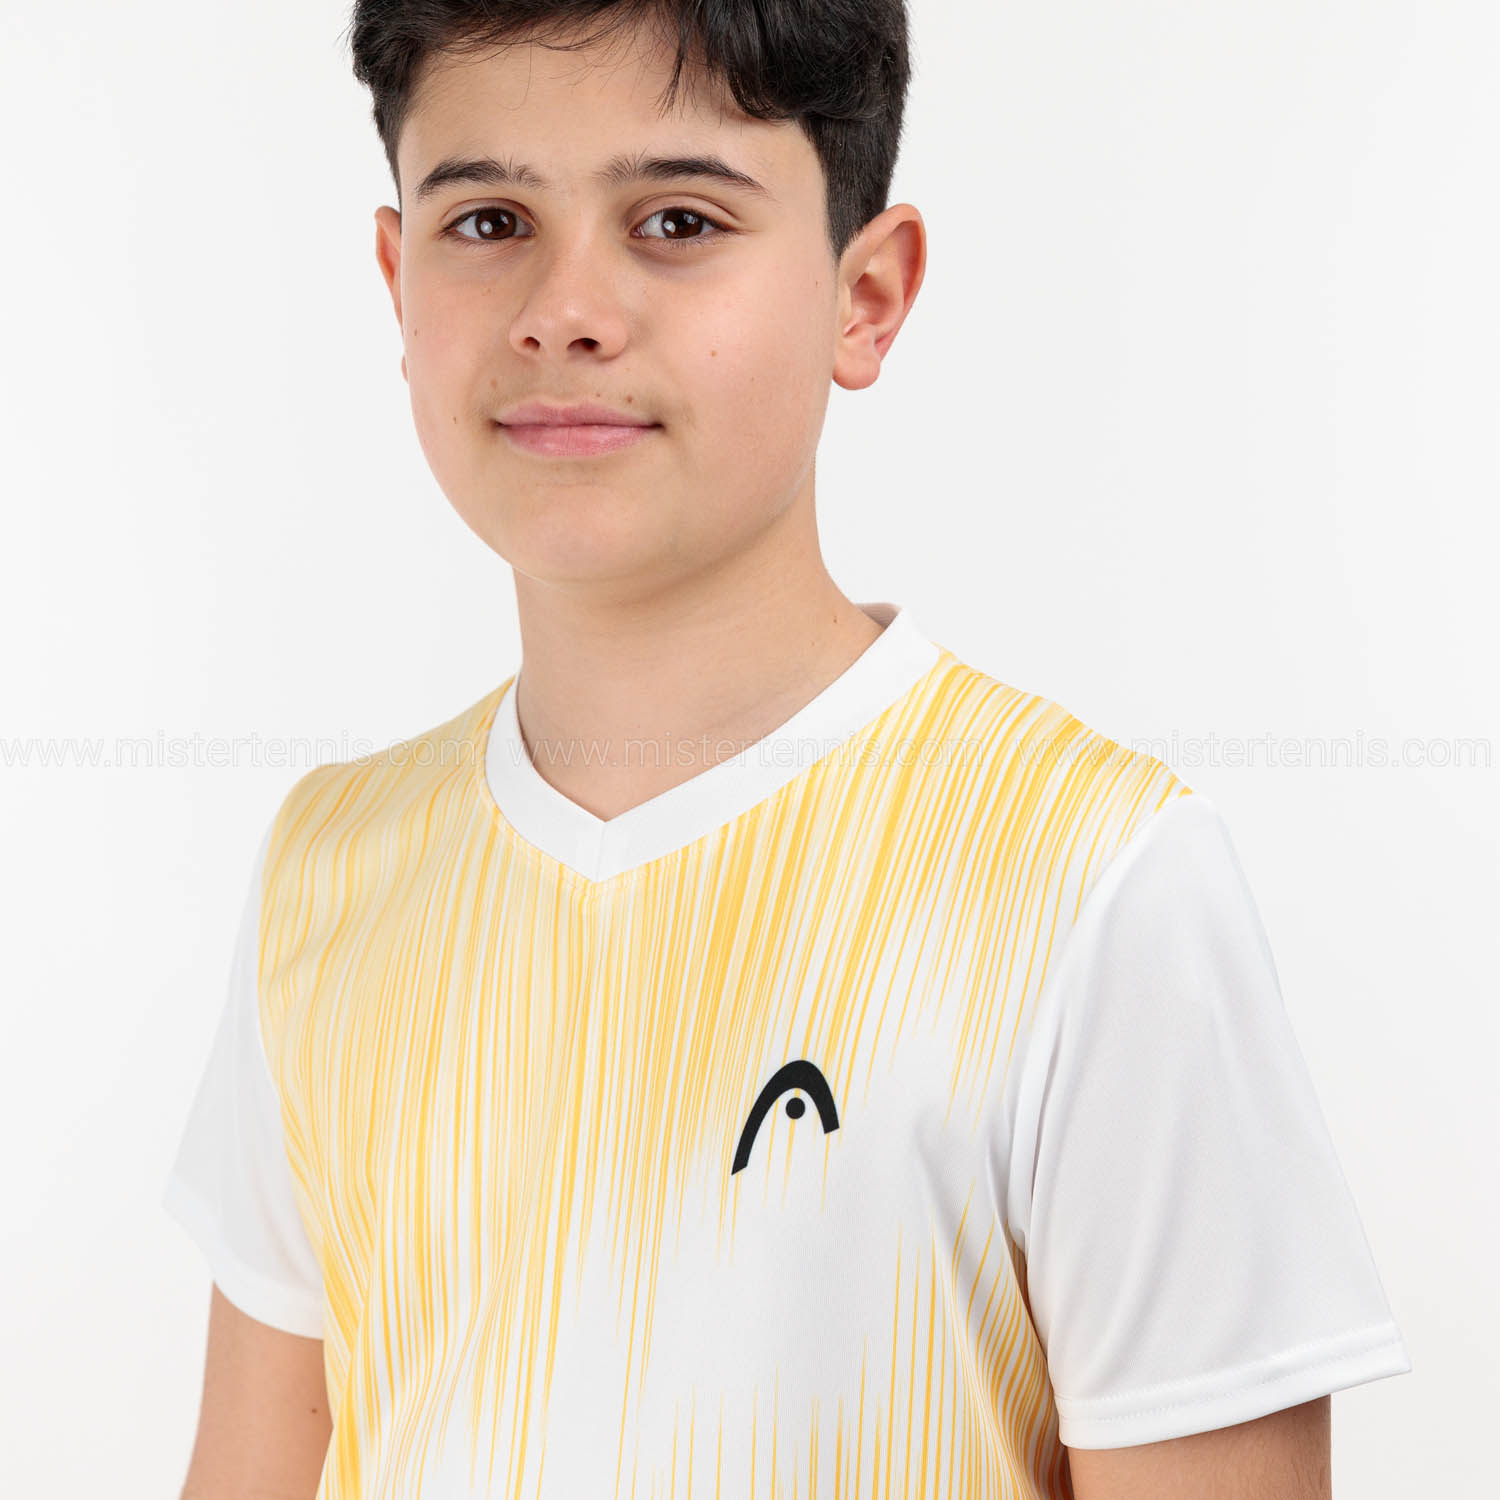 Head Topspin Pro Camiseta Niño - Print Perf Banana